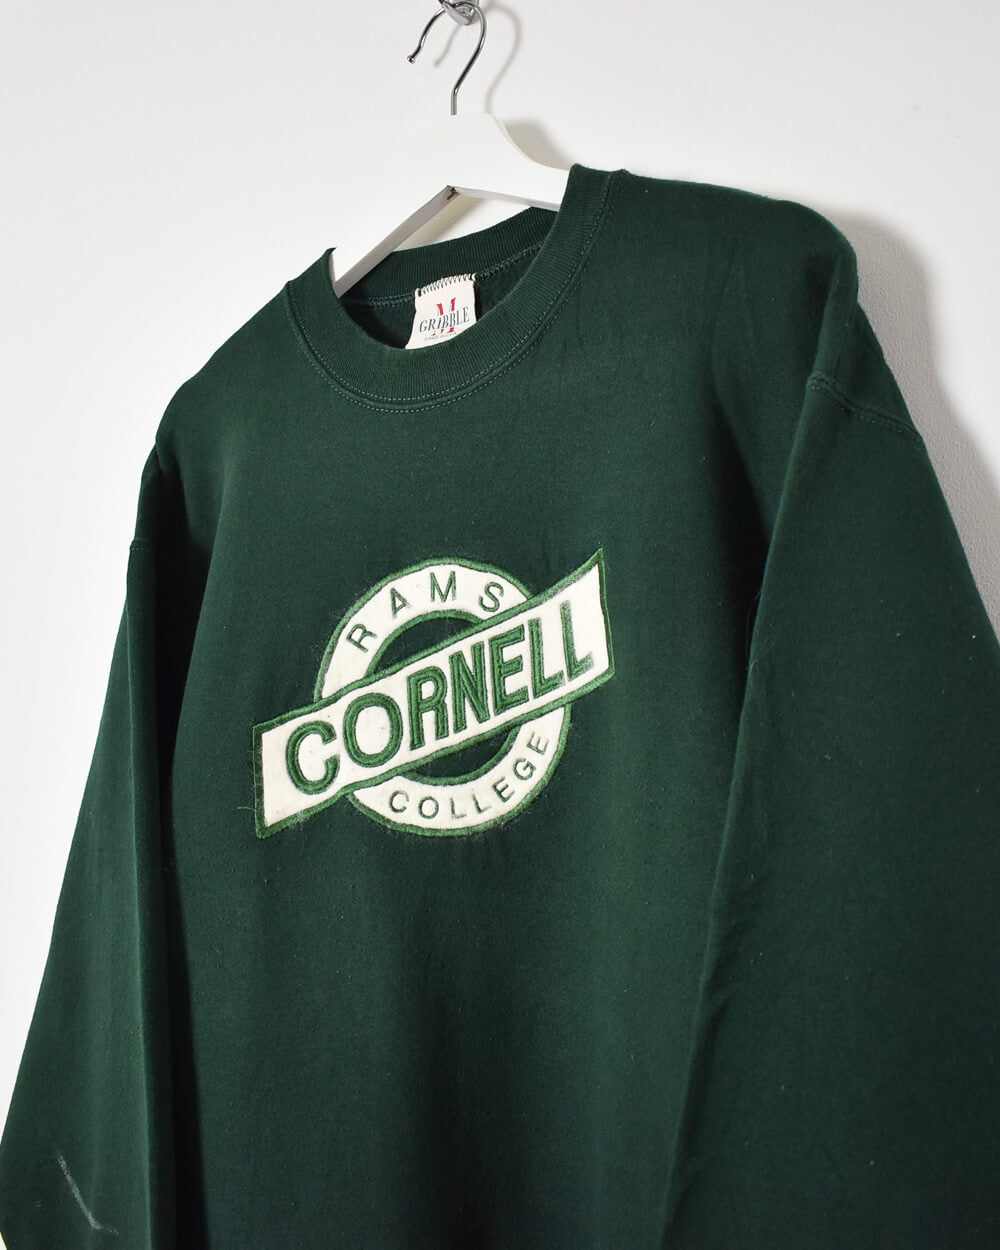 Gribble Rams Cornell College Sweatshirt - Medium - Domno Vintage 90s, 80s, 00s Retro and Vintage Clothing 